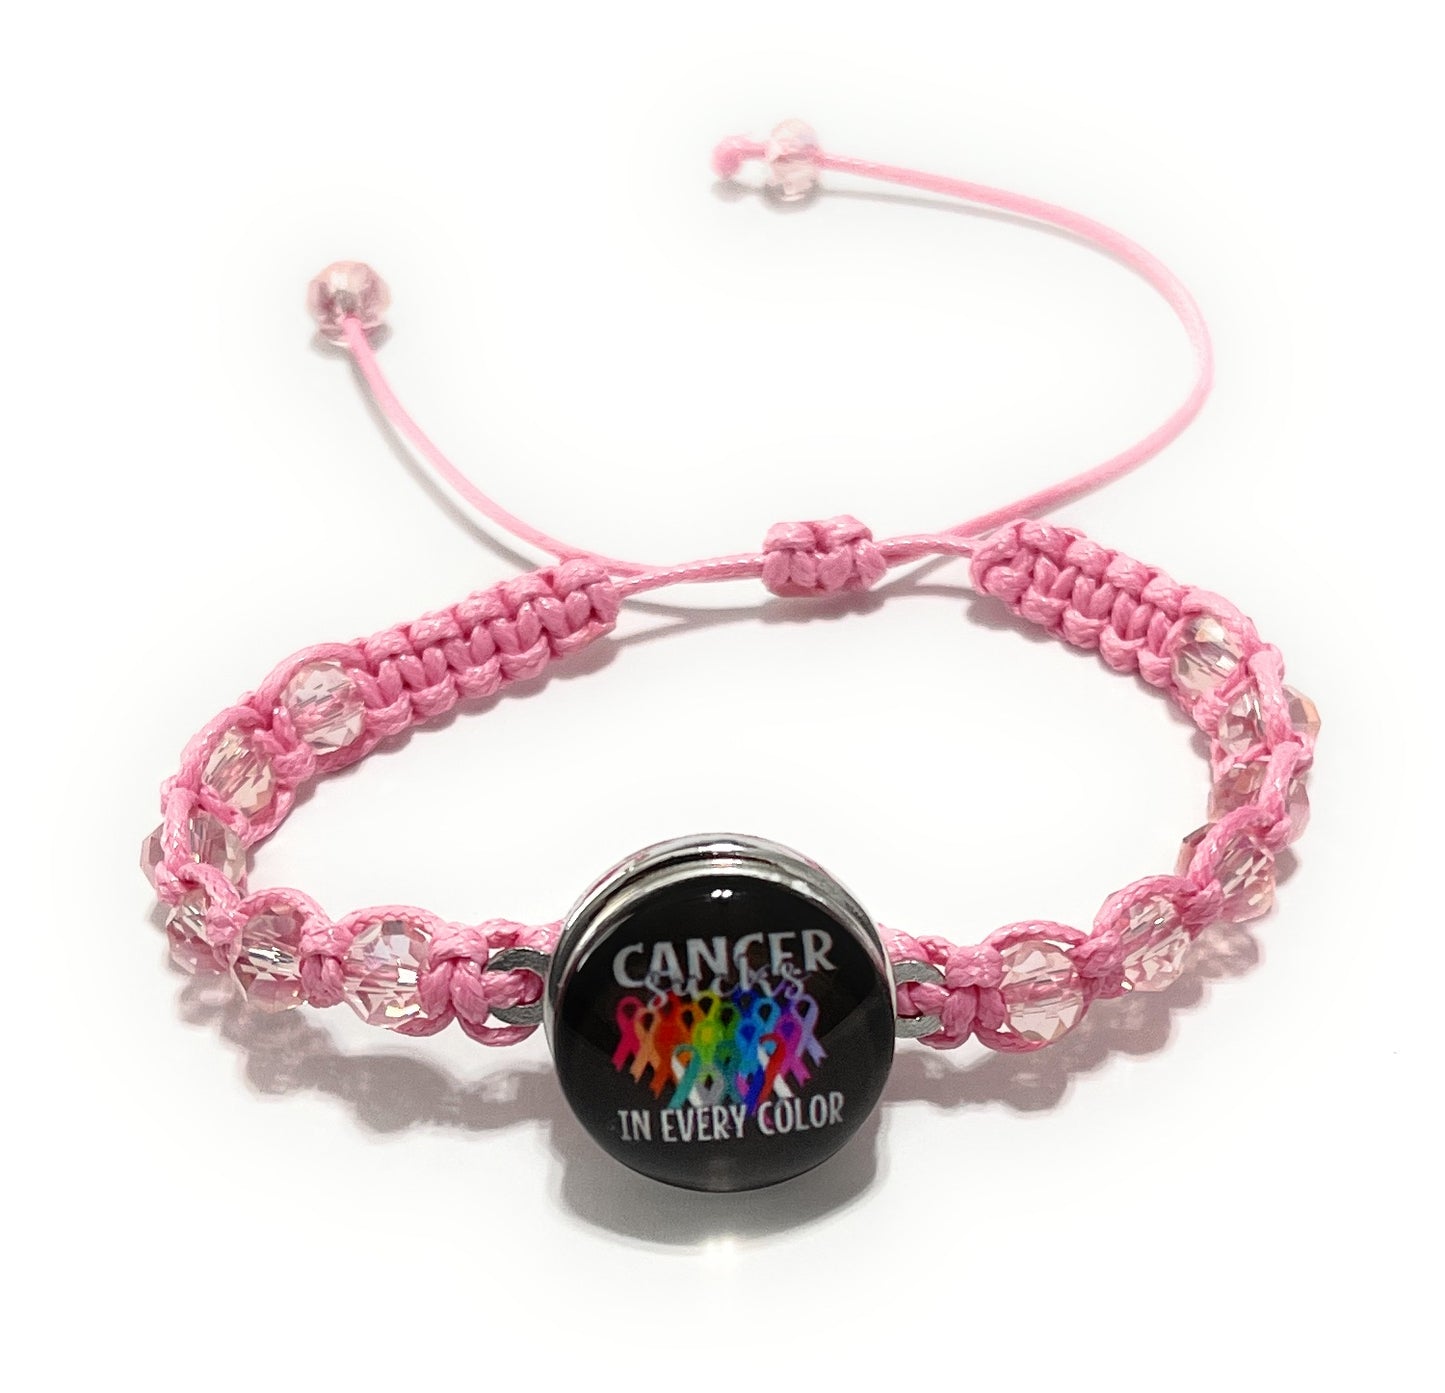 Cancer Sucks In Every Color Bracelet